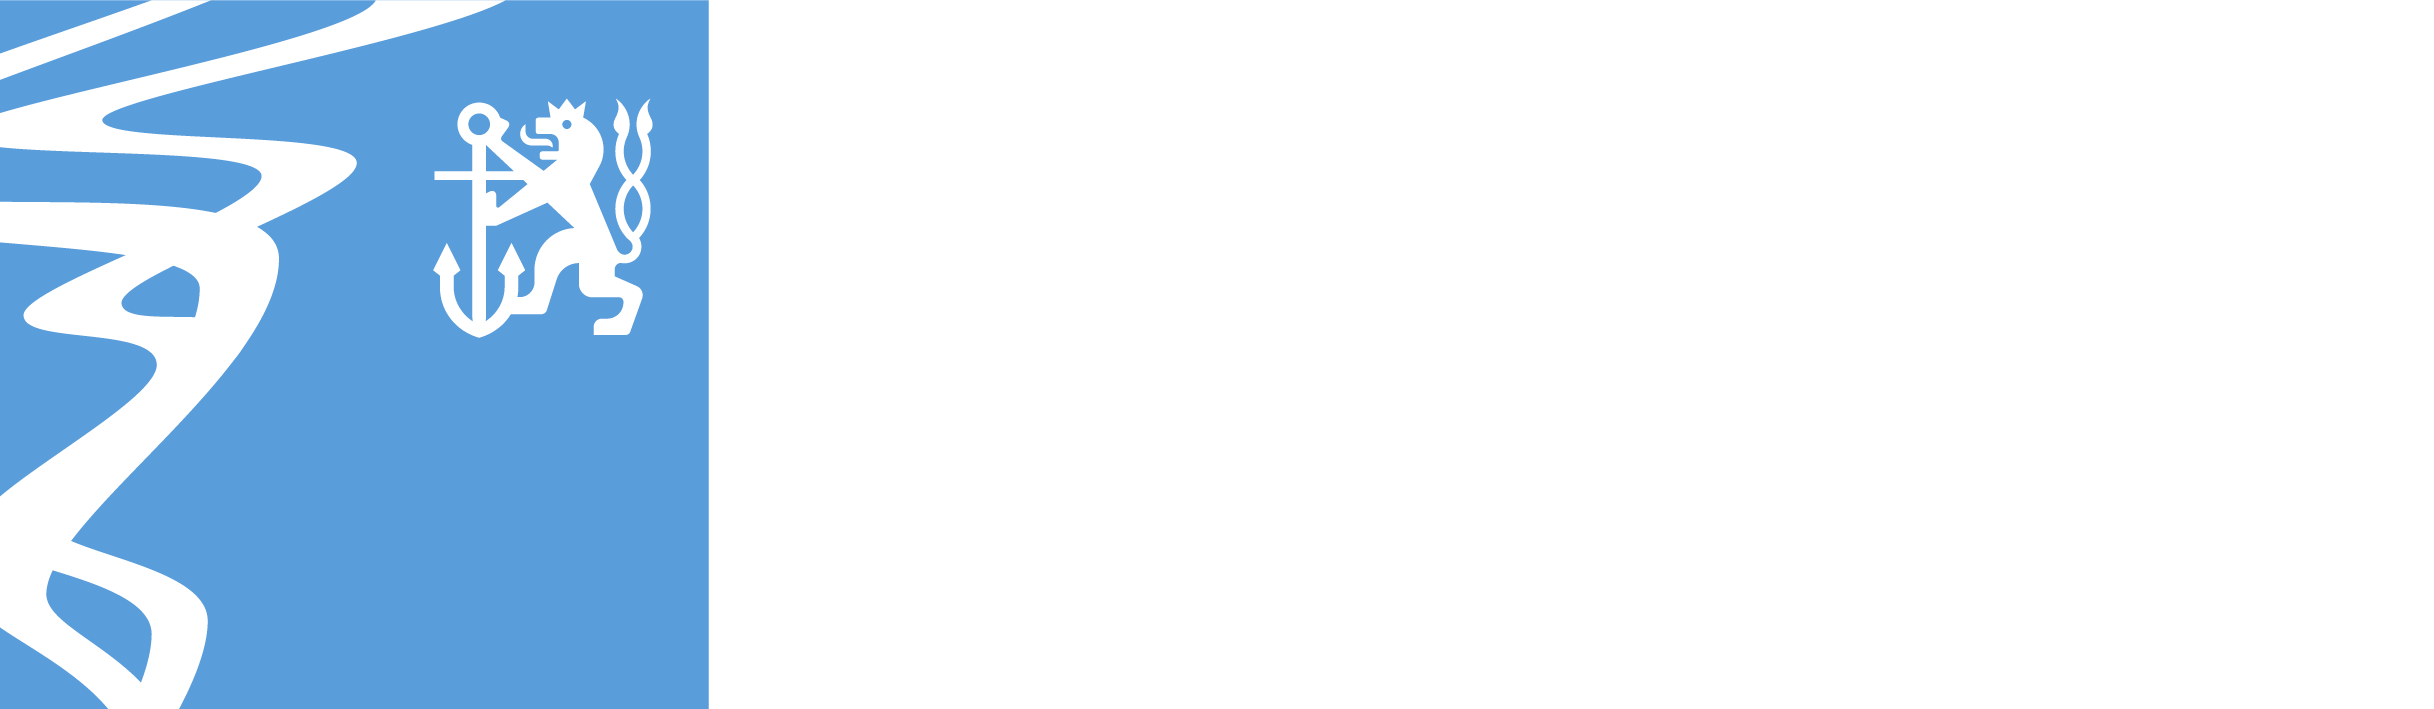 logo-laha-duesseldorf_neg